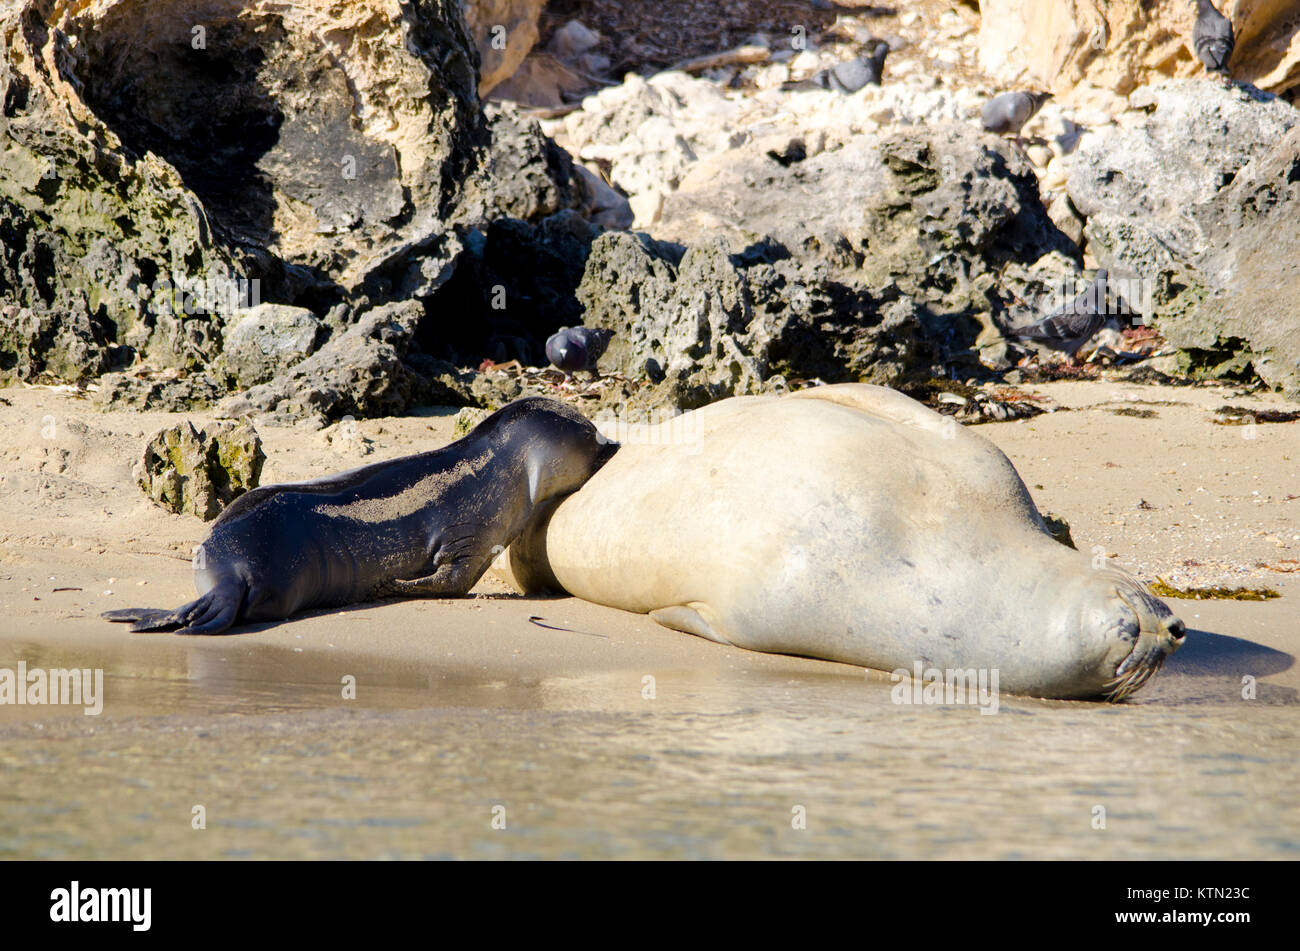 Female Southern Elephant Seal and Pup (Mirounga leonina) Shoalwater Islands Marine Park, Western Australia Stock Photo